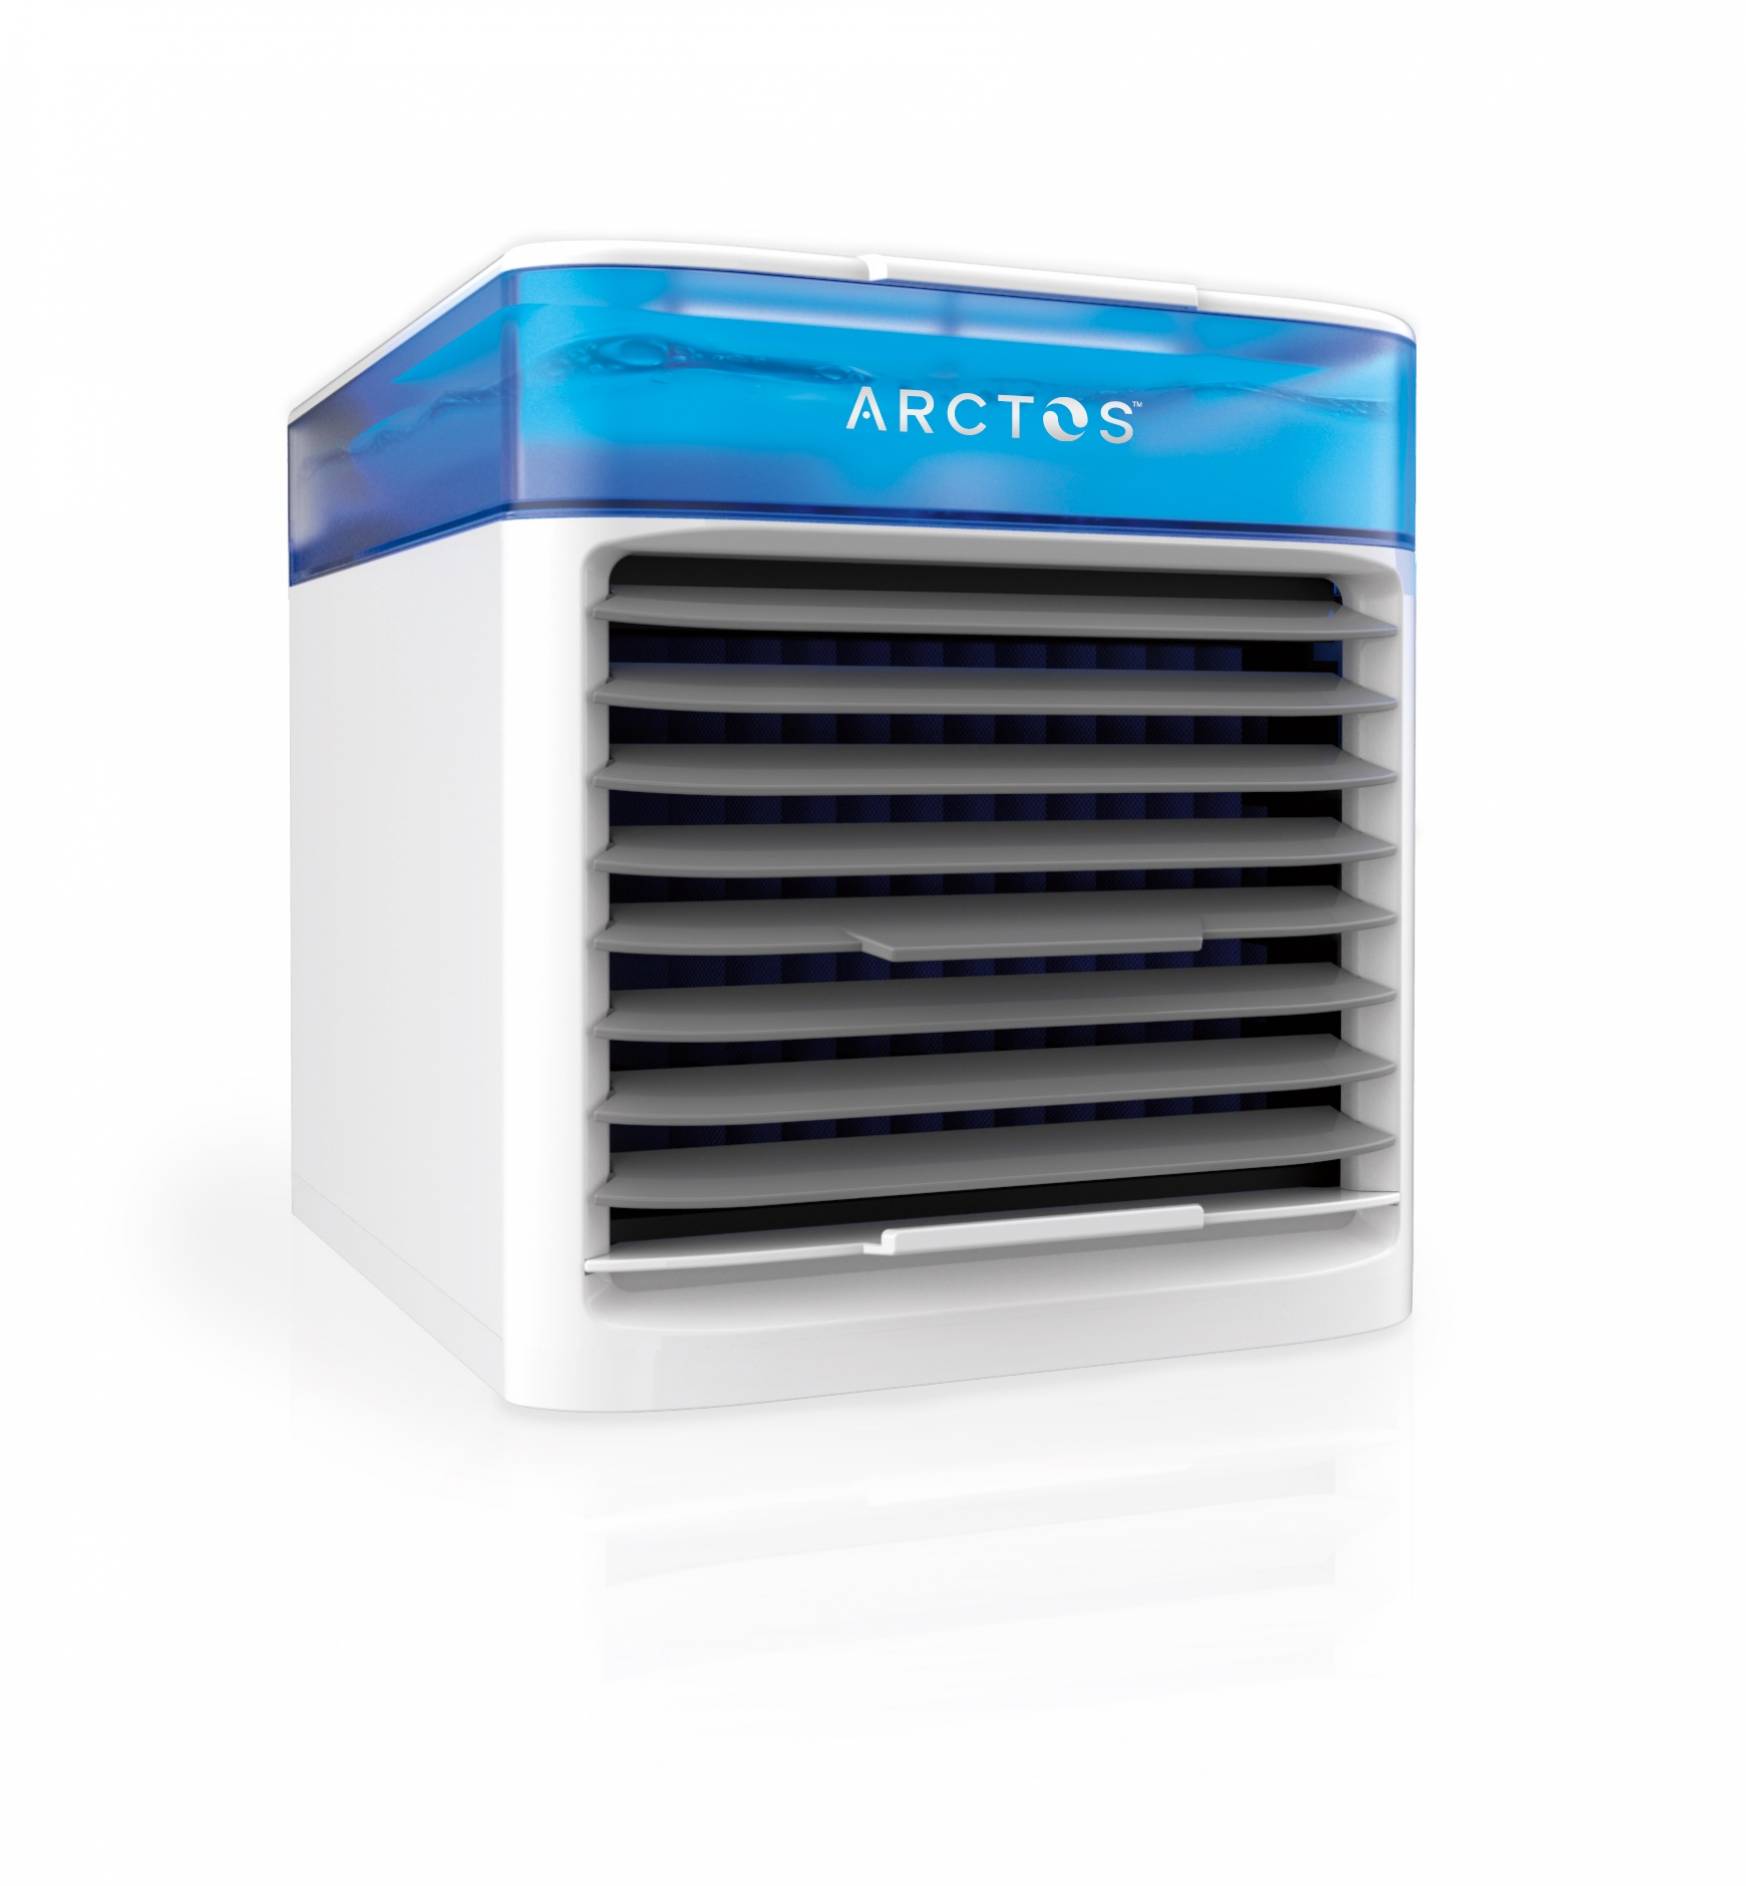 Arctos Cooler Website